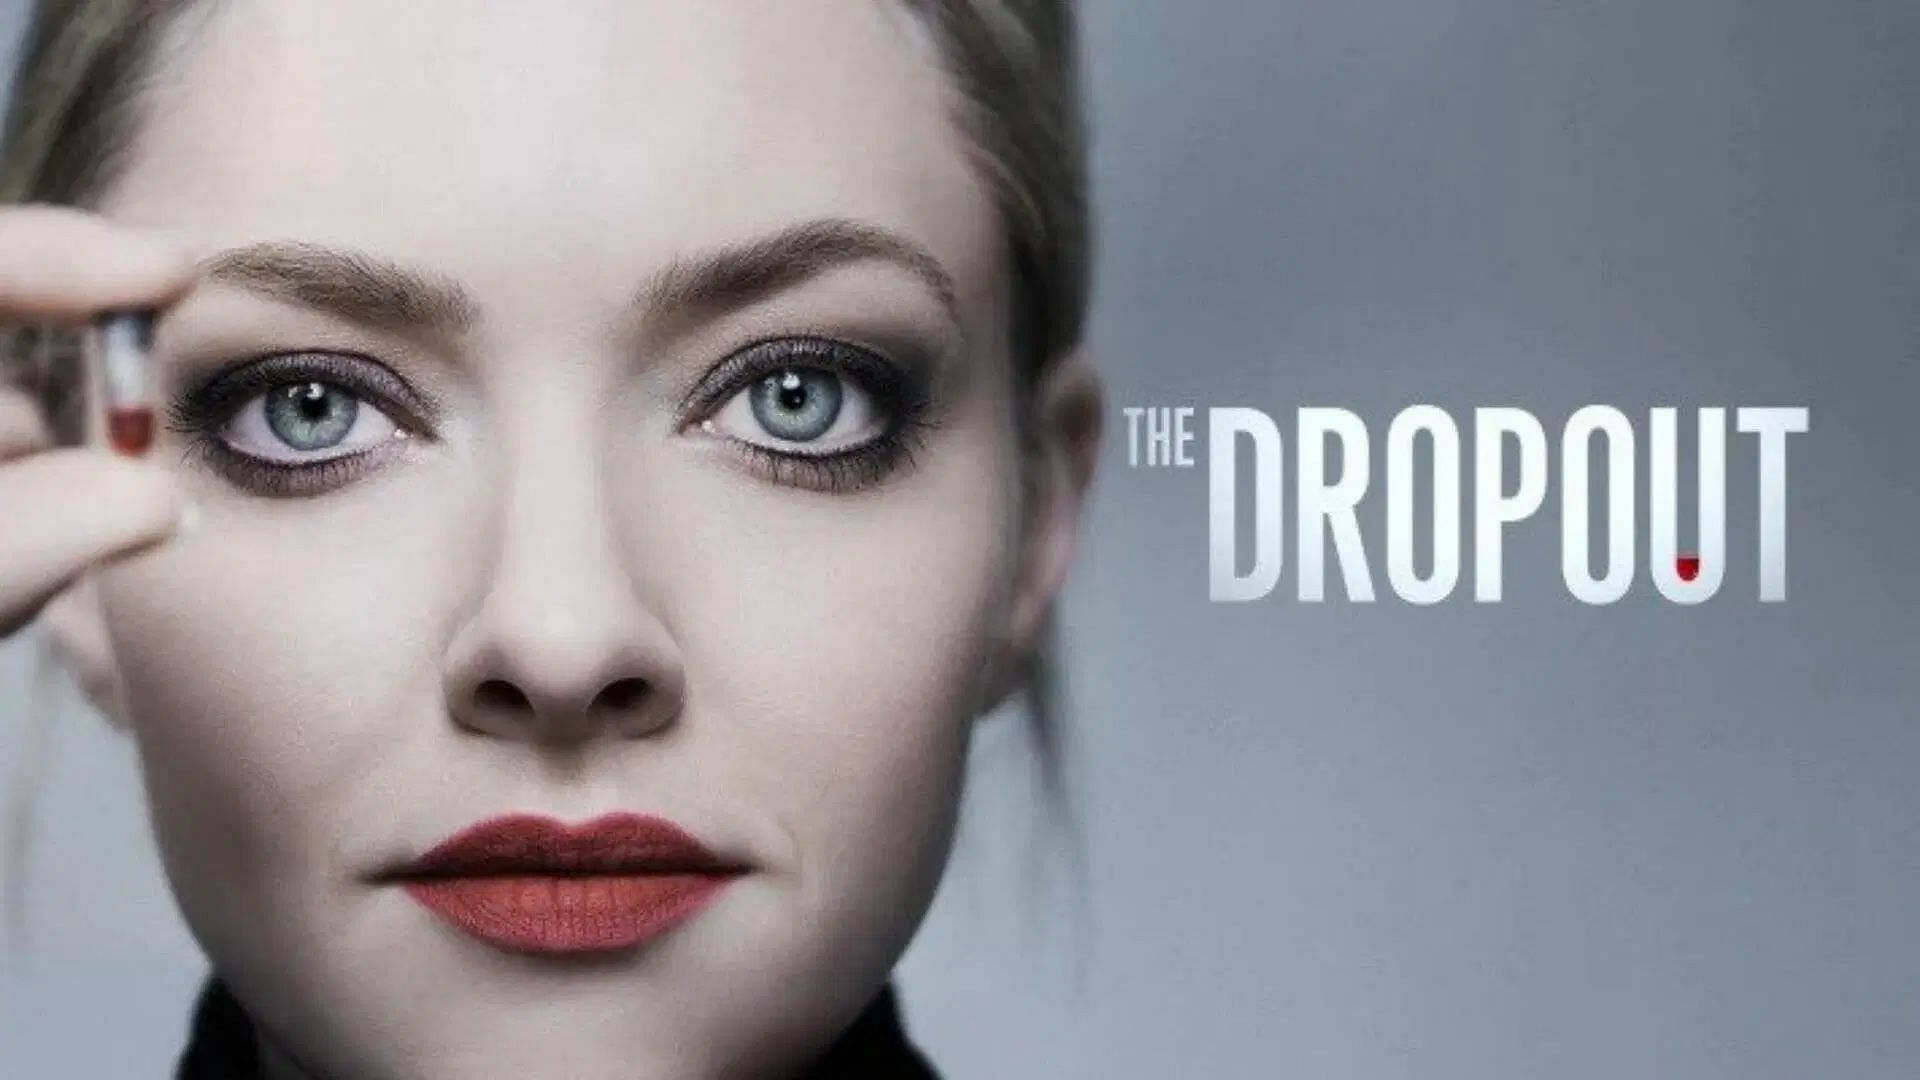 The Dropout (Image via Hulu)